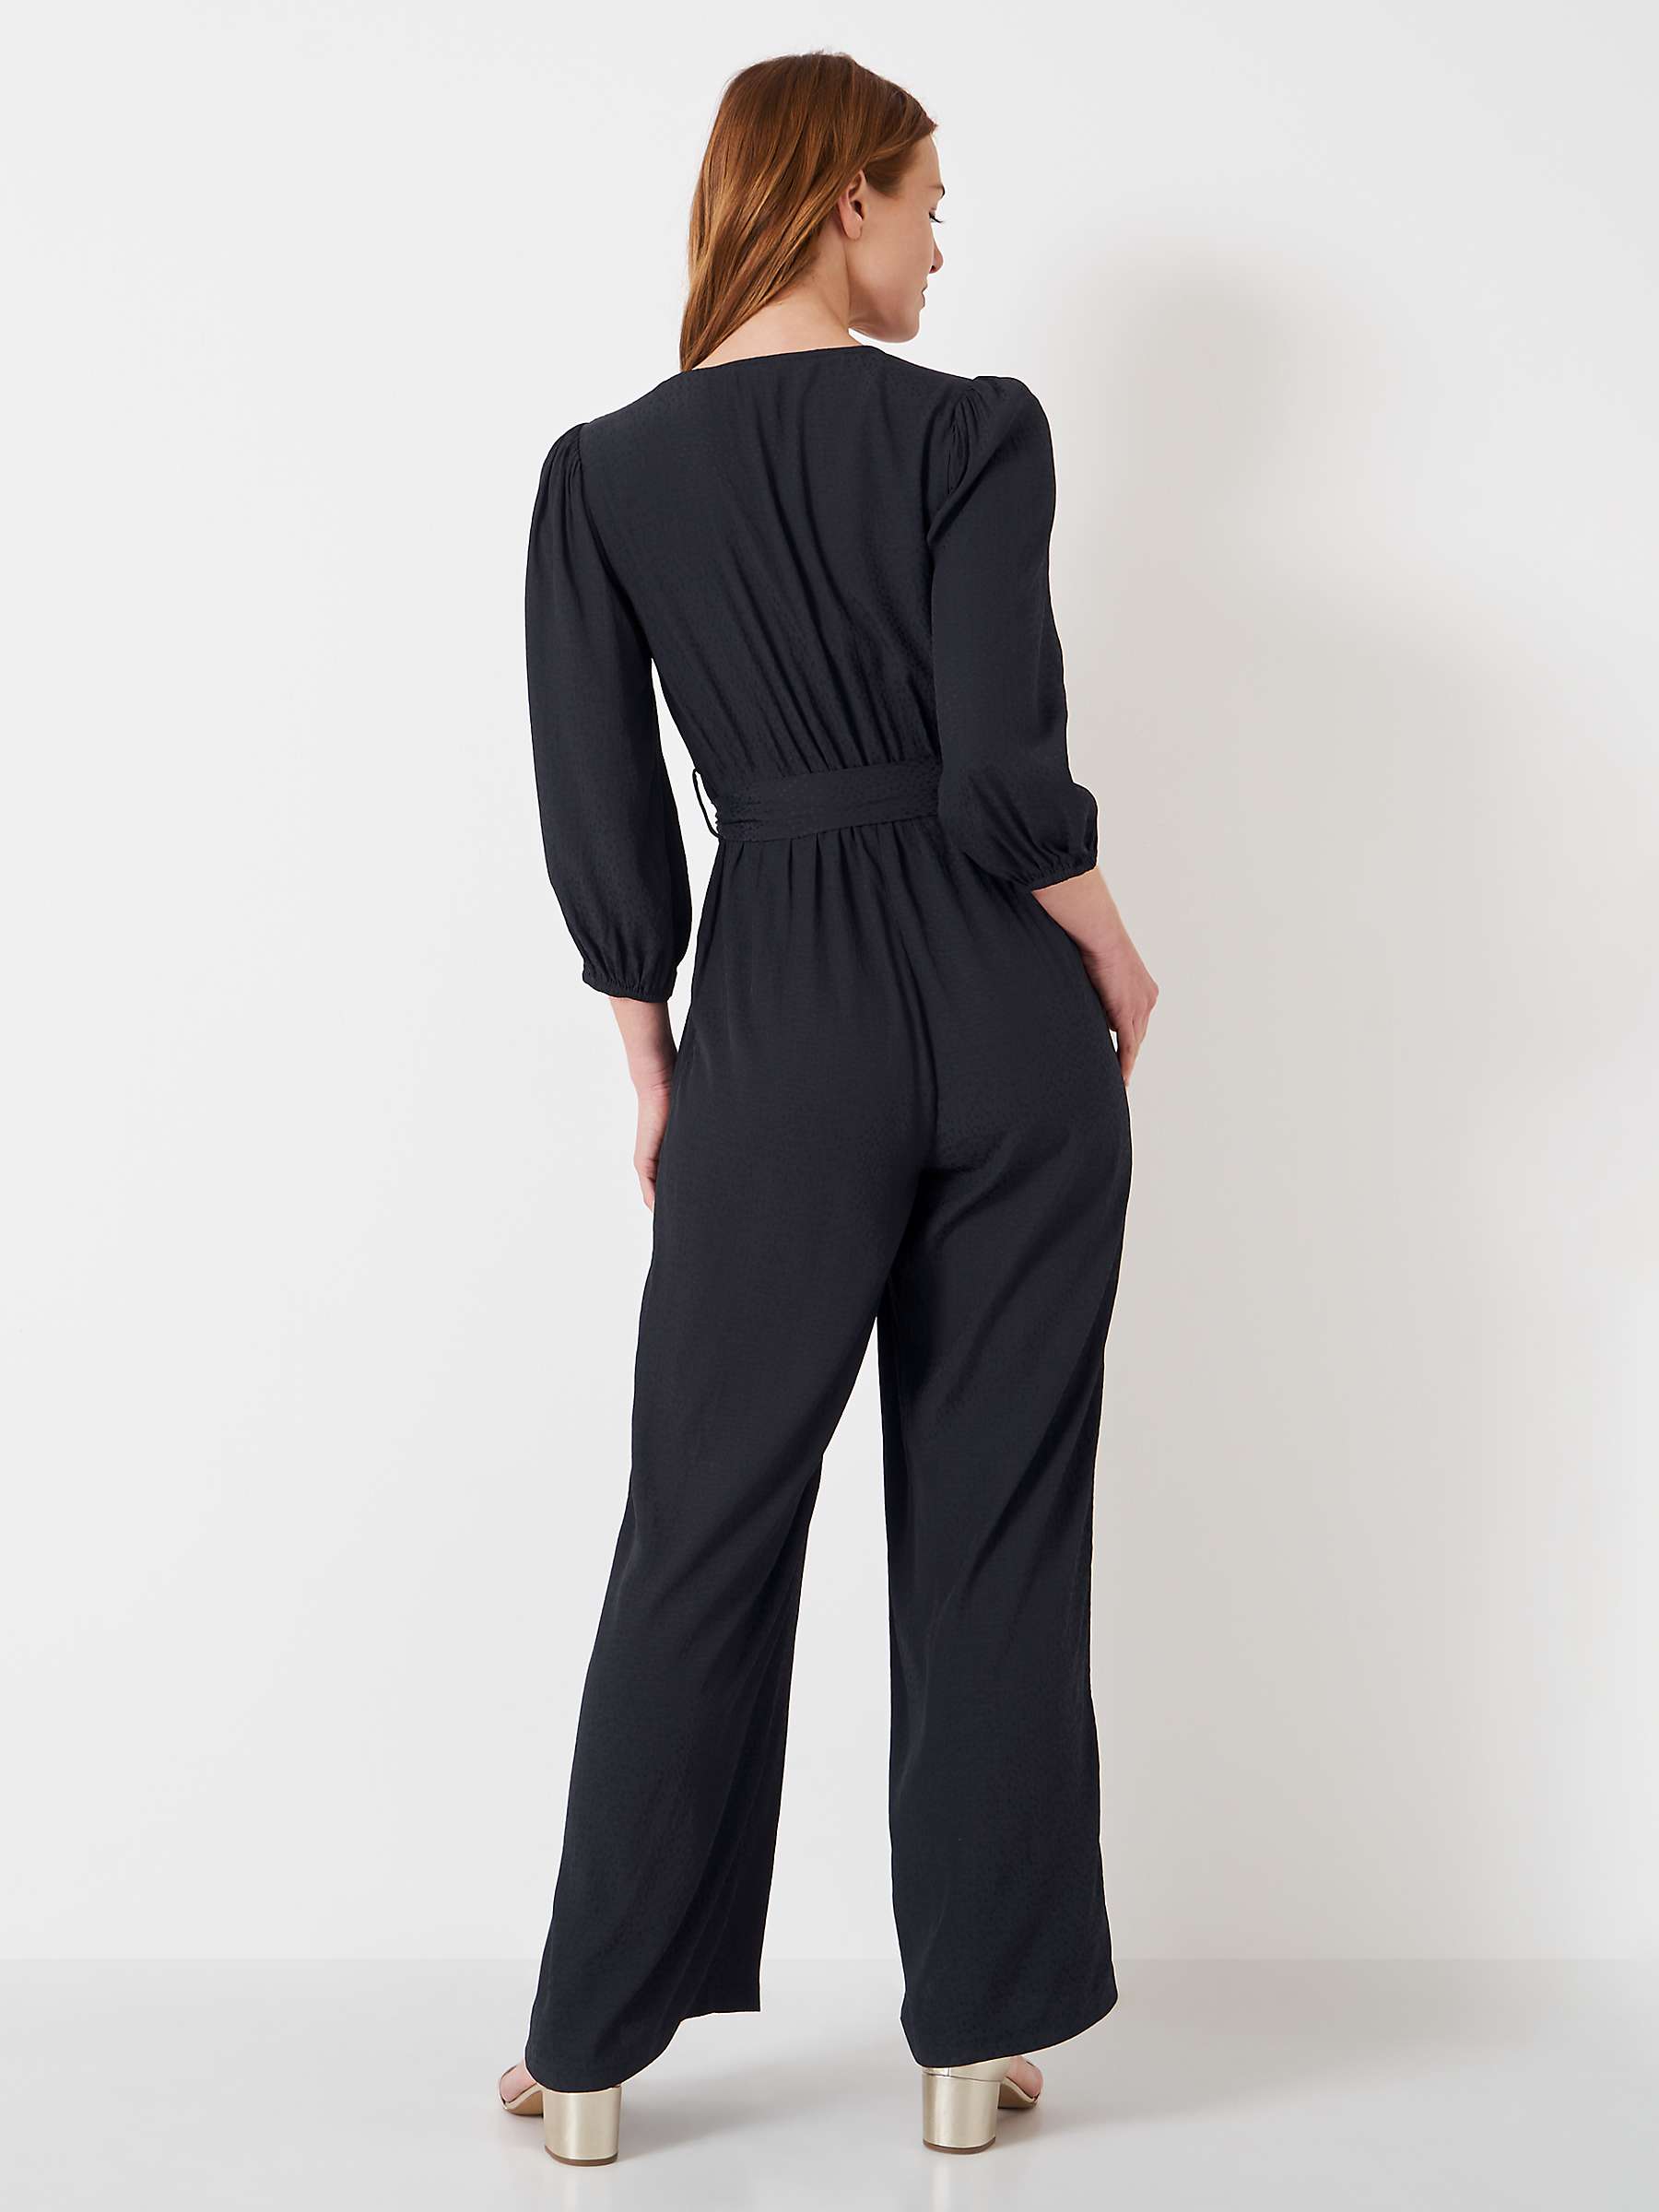 Buy Crew Clothing Celeste Jacquard Jumpsuit, Black Online at johnlewis.com